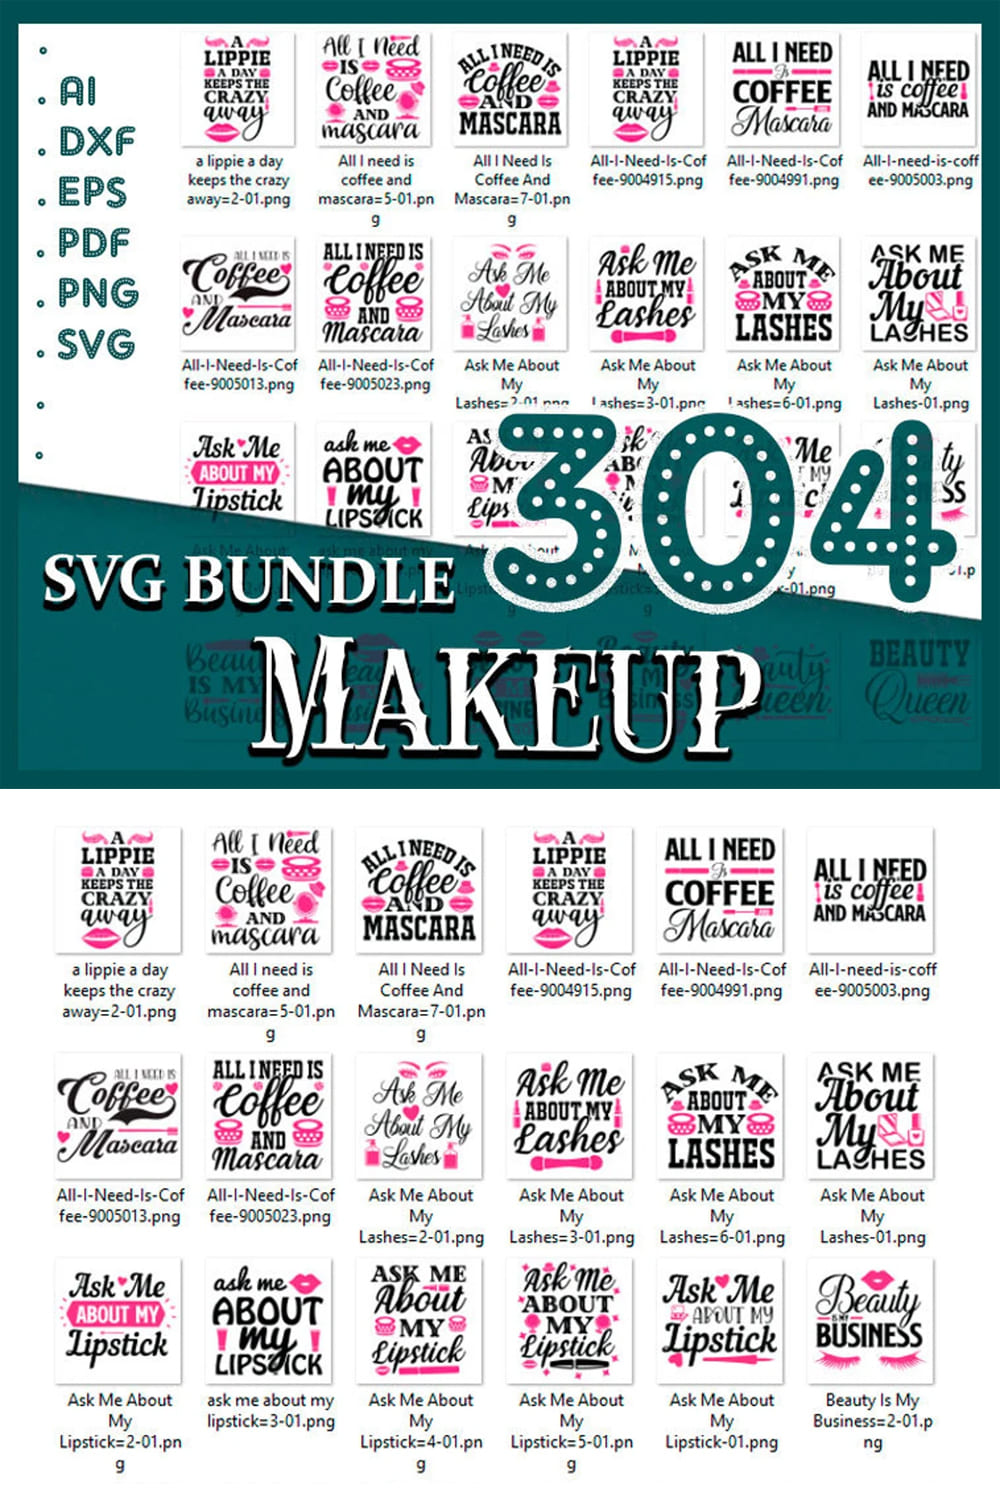 304 Makeup SVG Bundle pinterest image.